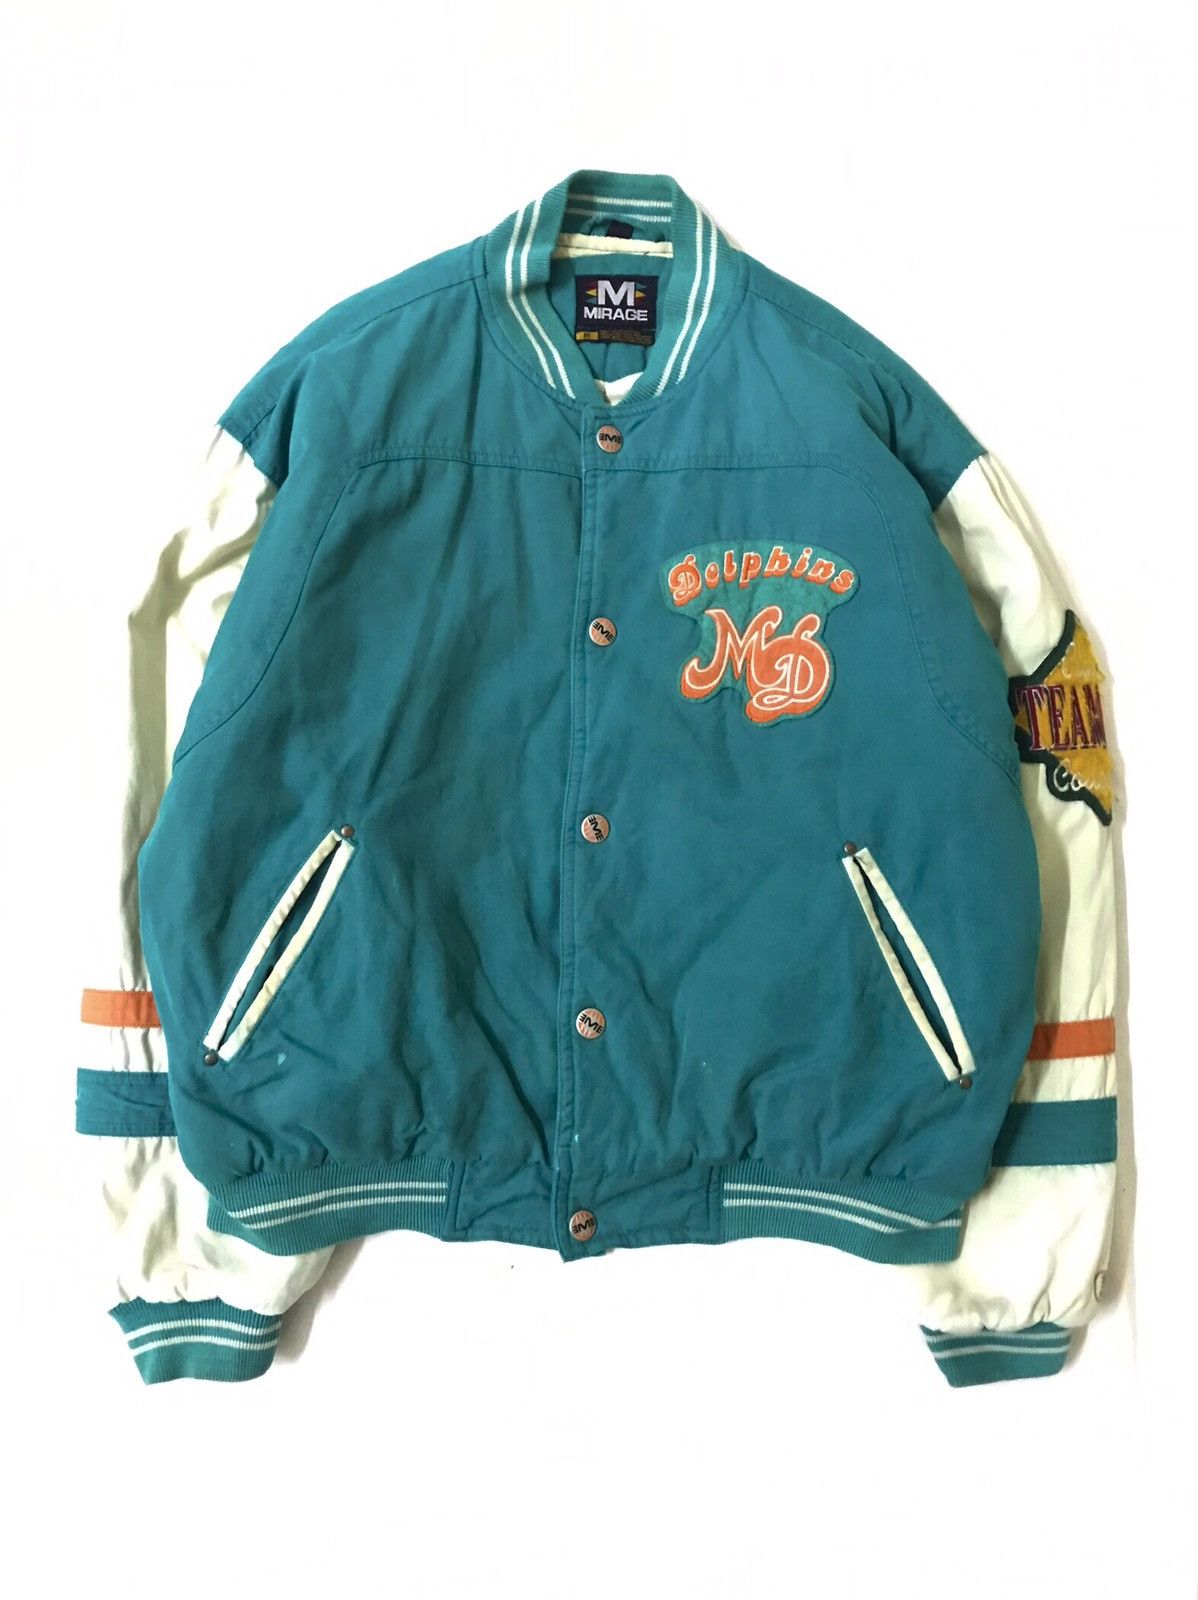 Vintage 90s MIAMI DOLPHIN NFL Team Jacket Size US M / EU 48-50 / 2 - 1 Preview